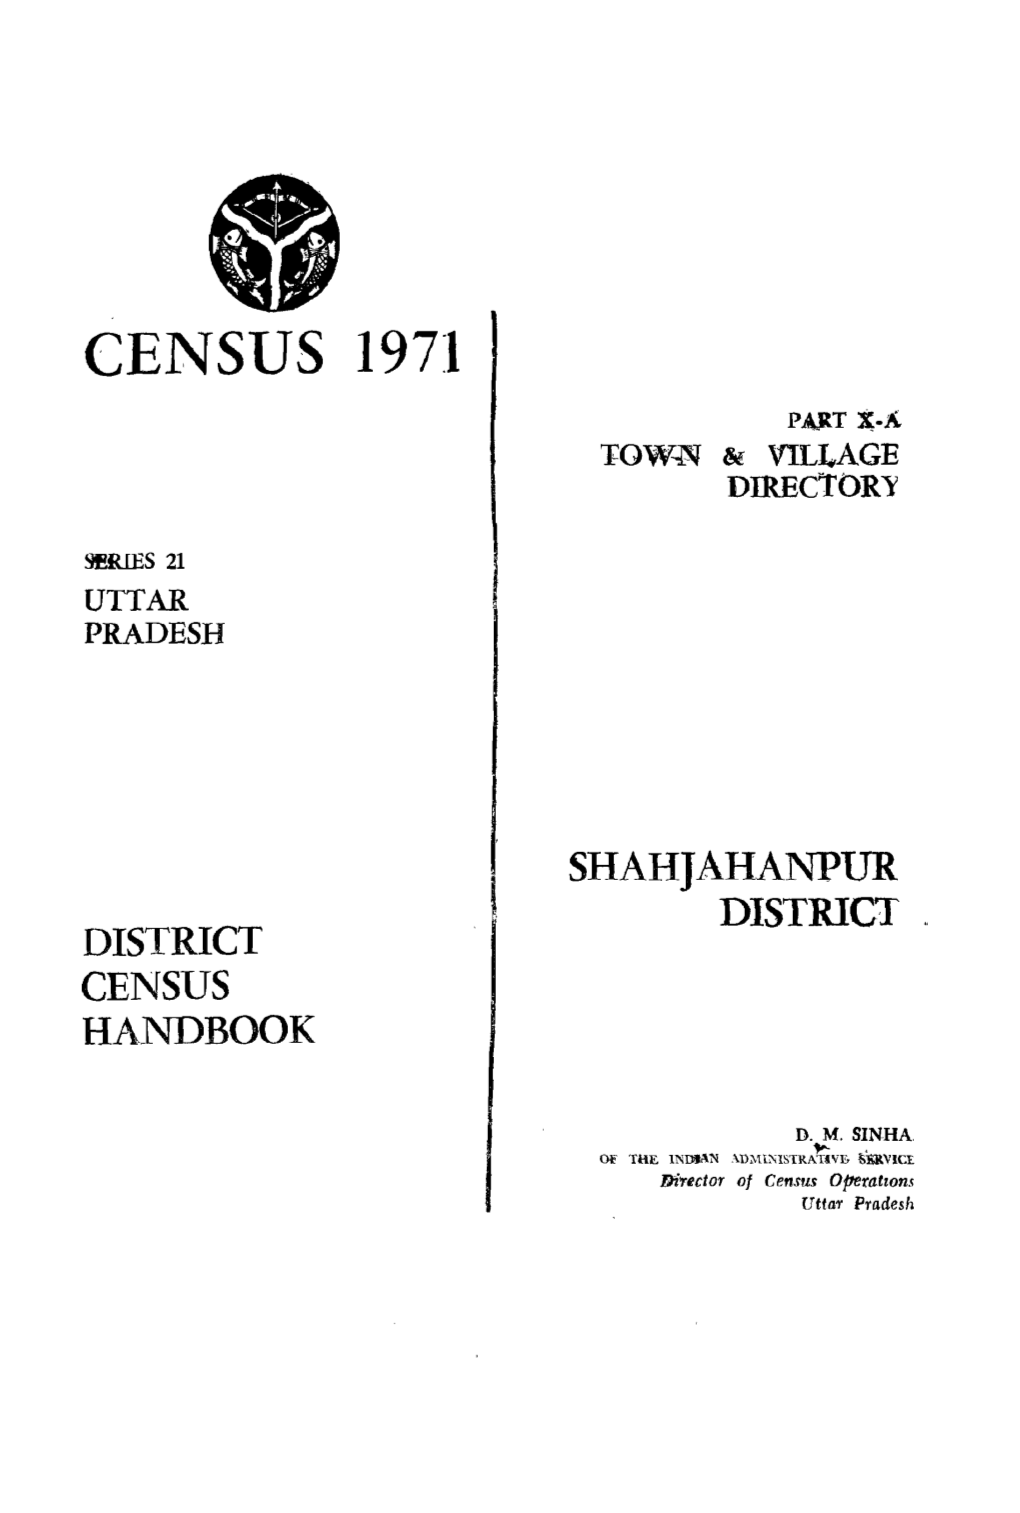 District Census Handbook, Shahjahanpur, Part X-A, Series-21